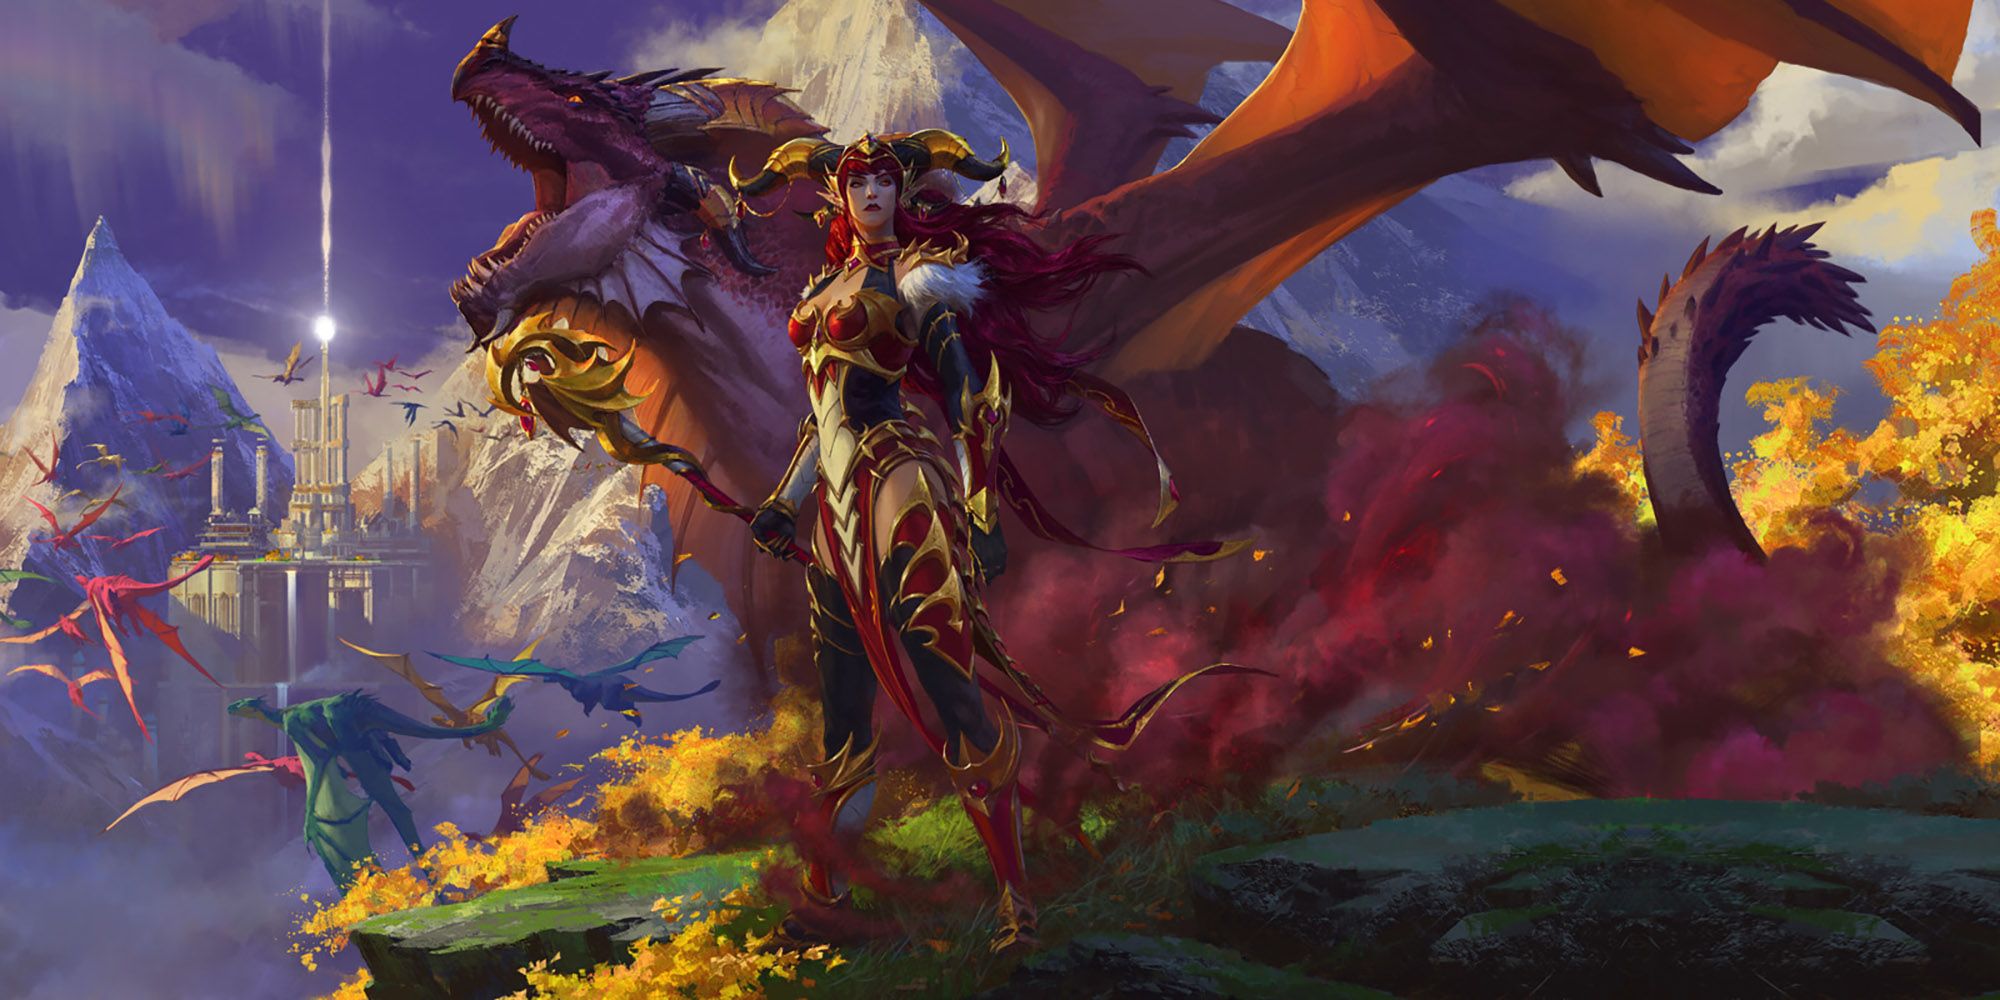 Dragonflight, World of Warcraft's next expansion